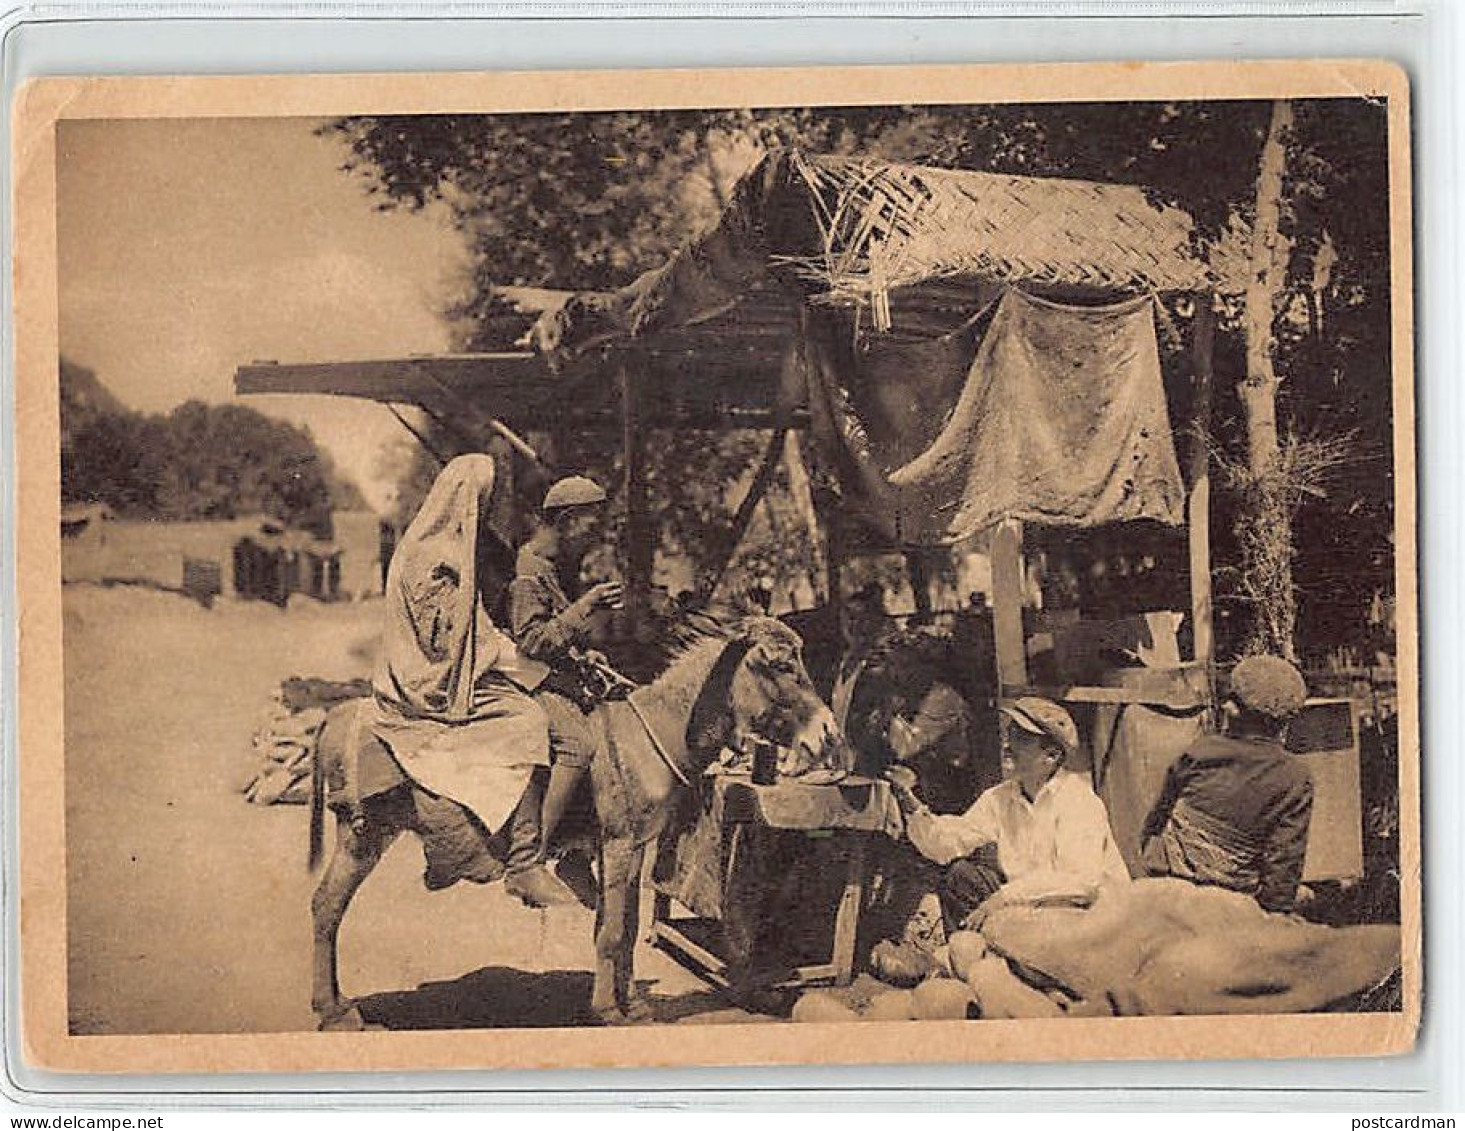 Uzbekistan - SAMARKAND - On The Back Of A Mule - Uzbekistan